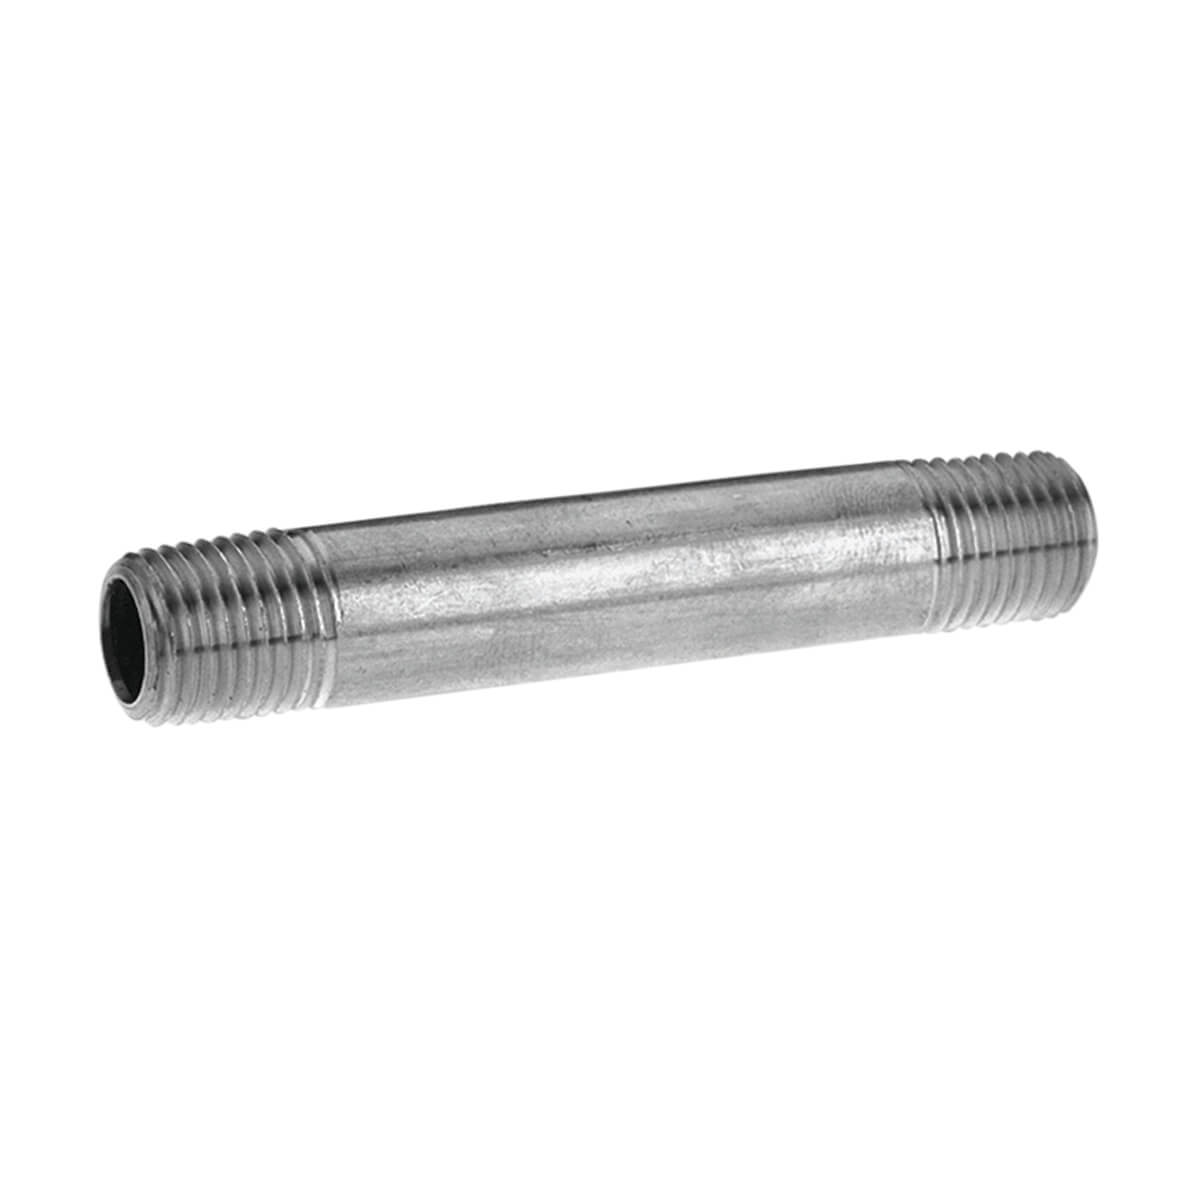 Pipe Nipple Galvanized Steel - 3/4-in x 4-in